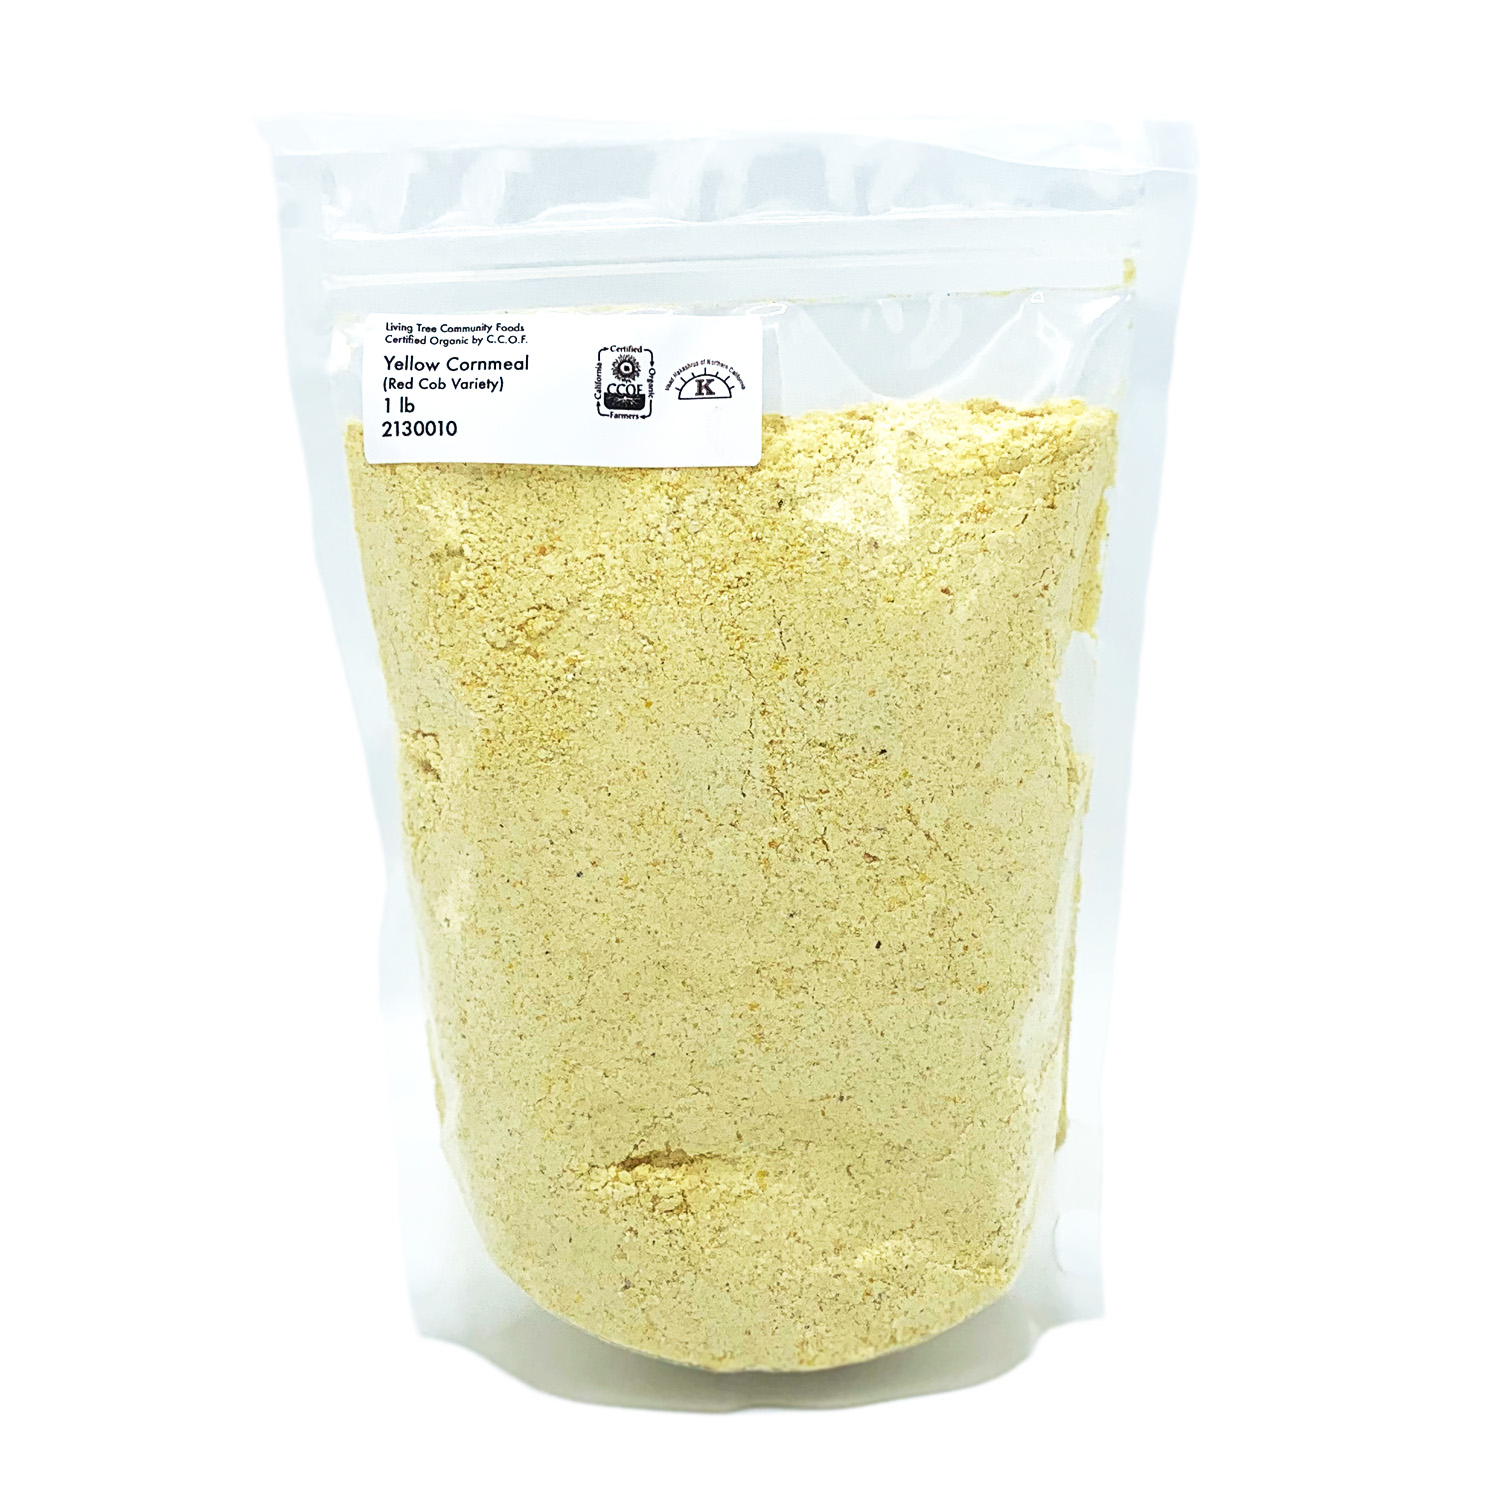 Yellow Cornmeal Package